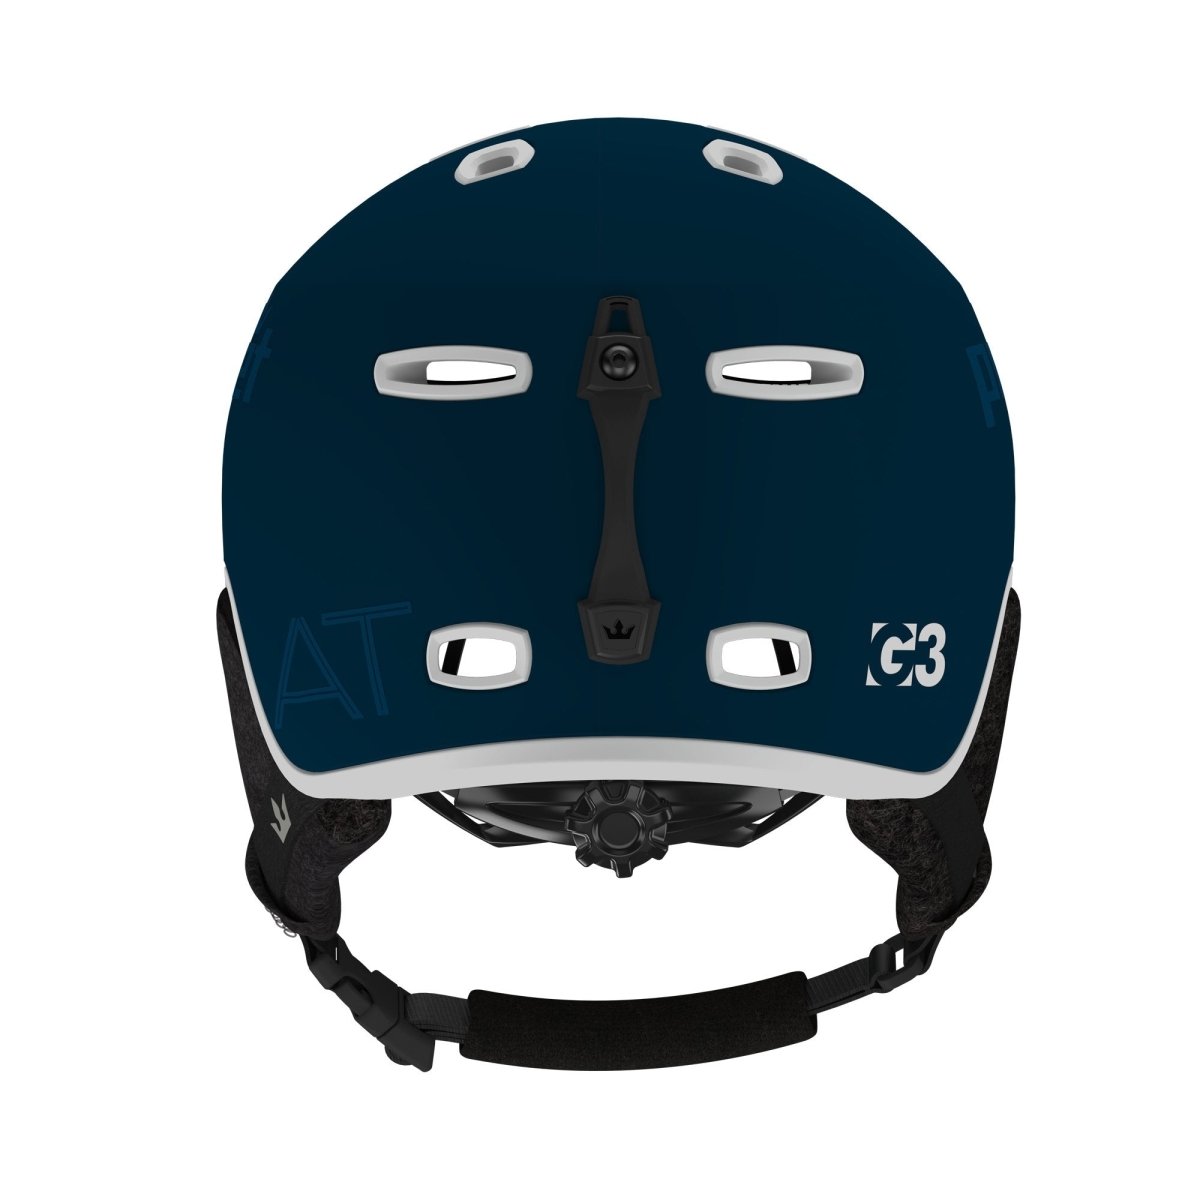 AT Helmet - Accessories - G3 Store [CAD]